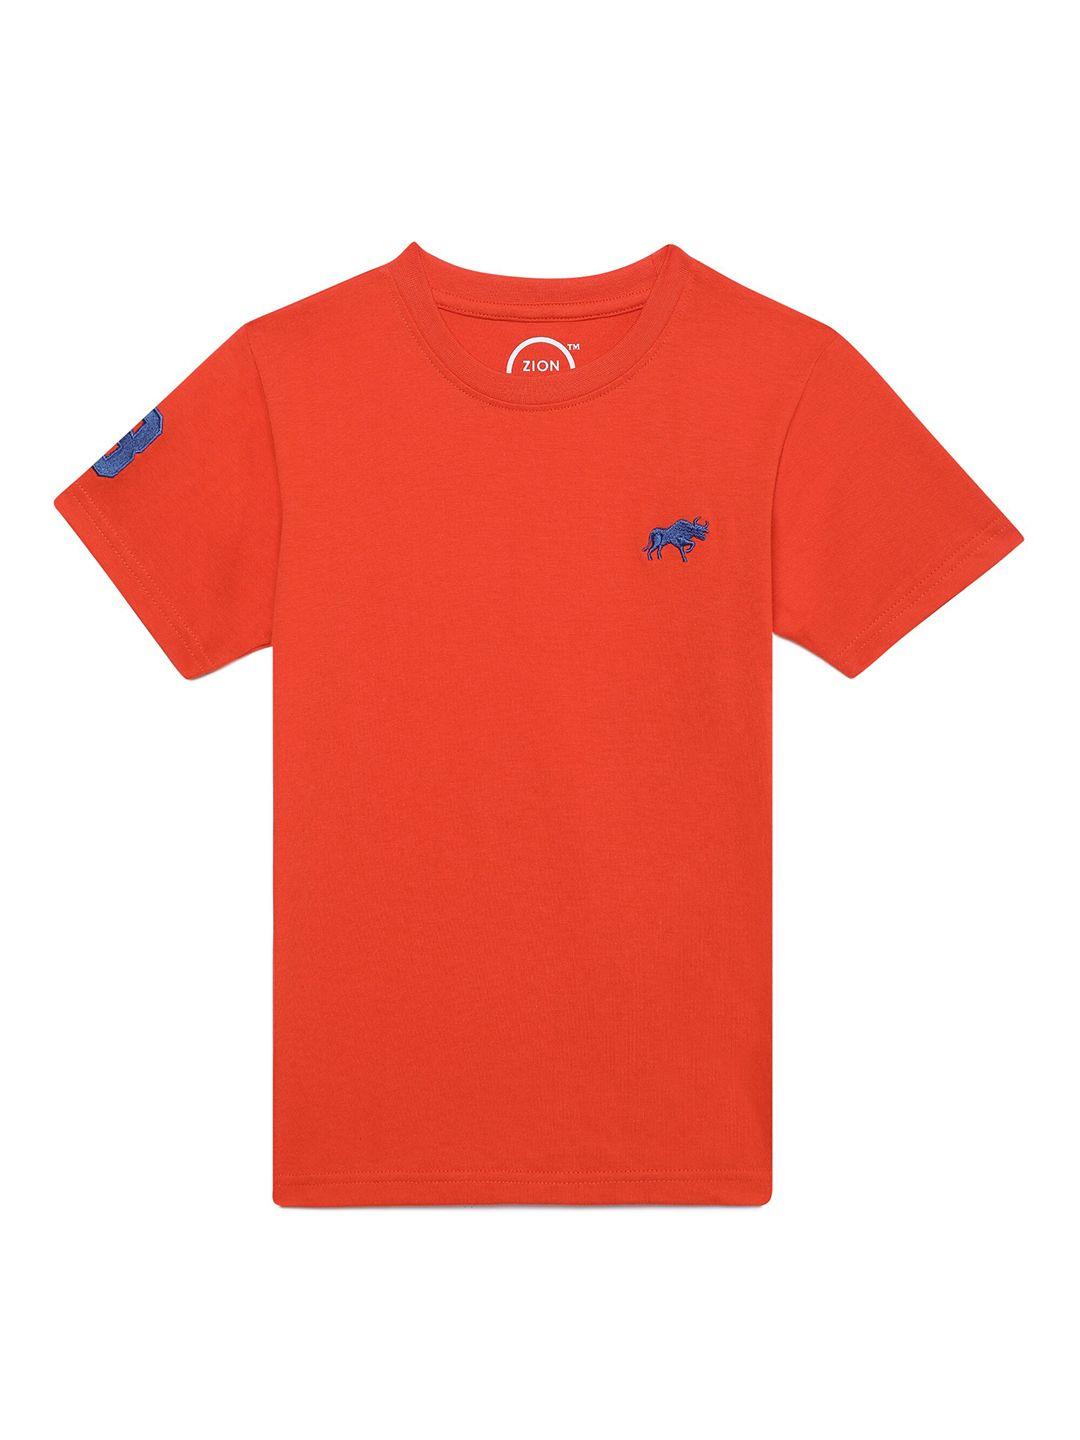 zion boys orange slim fit t-shirt